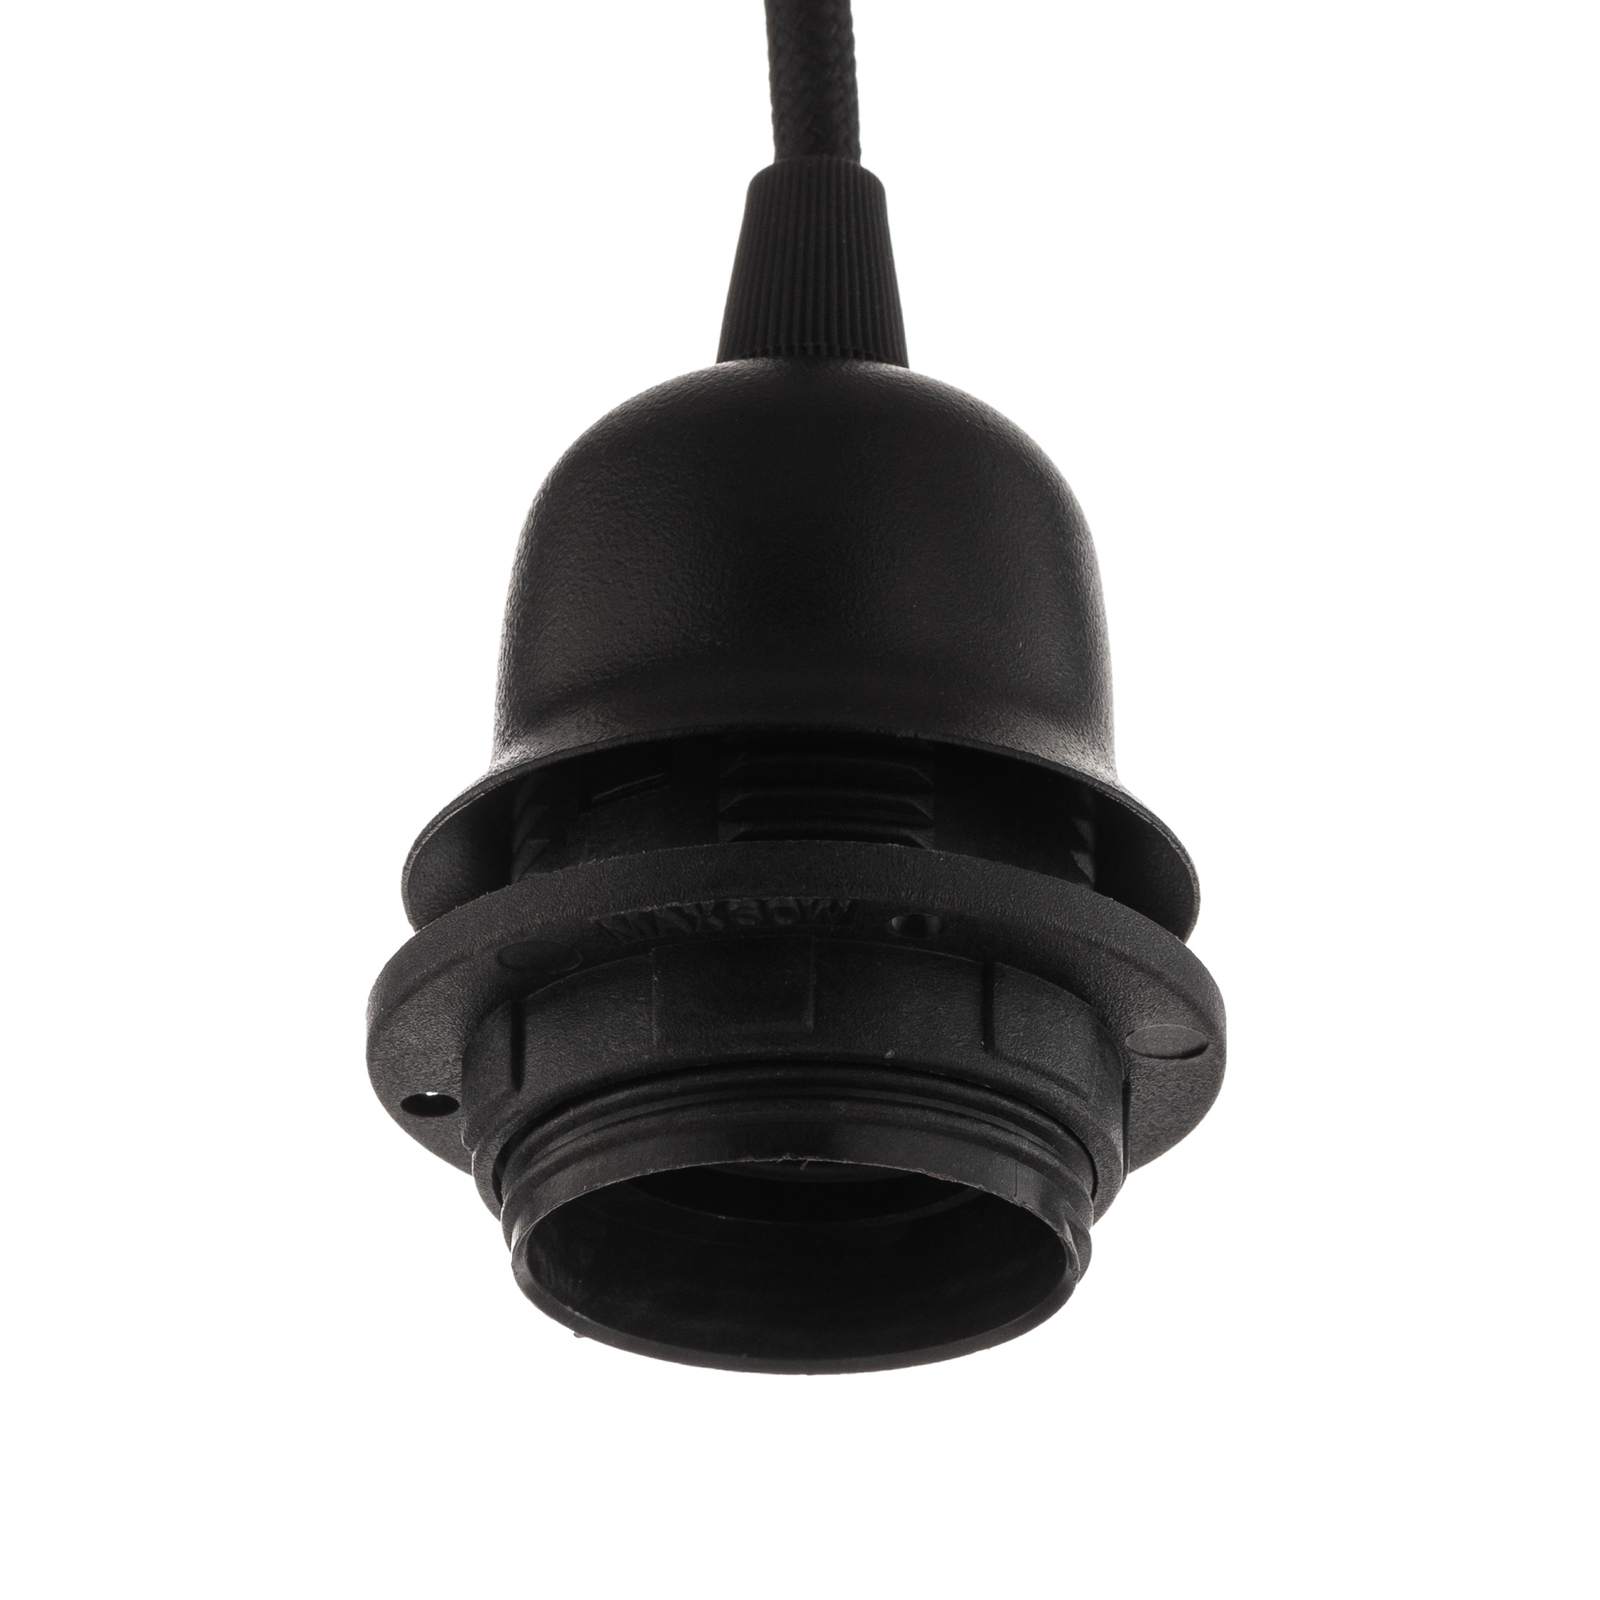 ZW Bec 250 pendant light, five-bulb